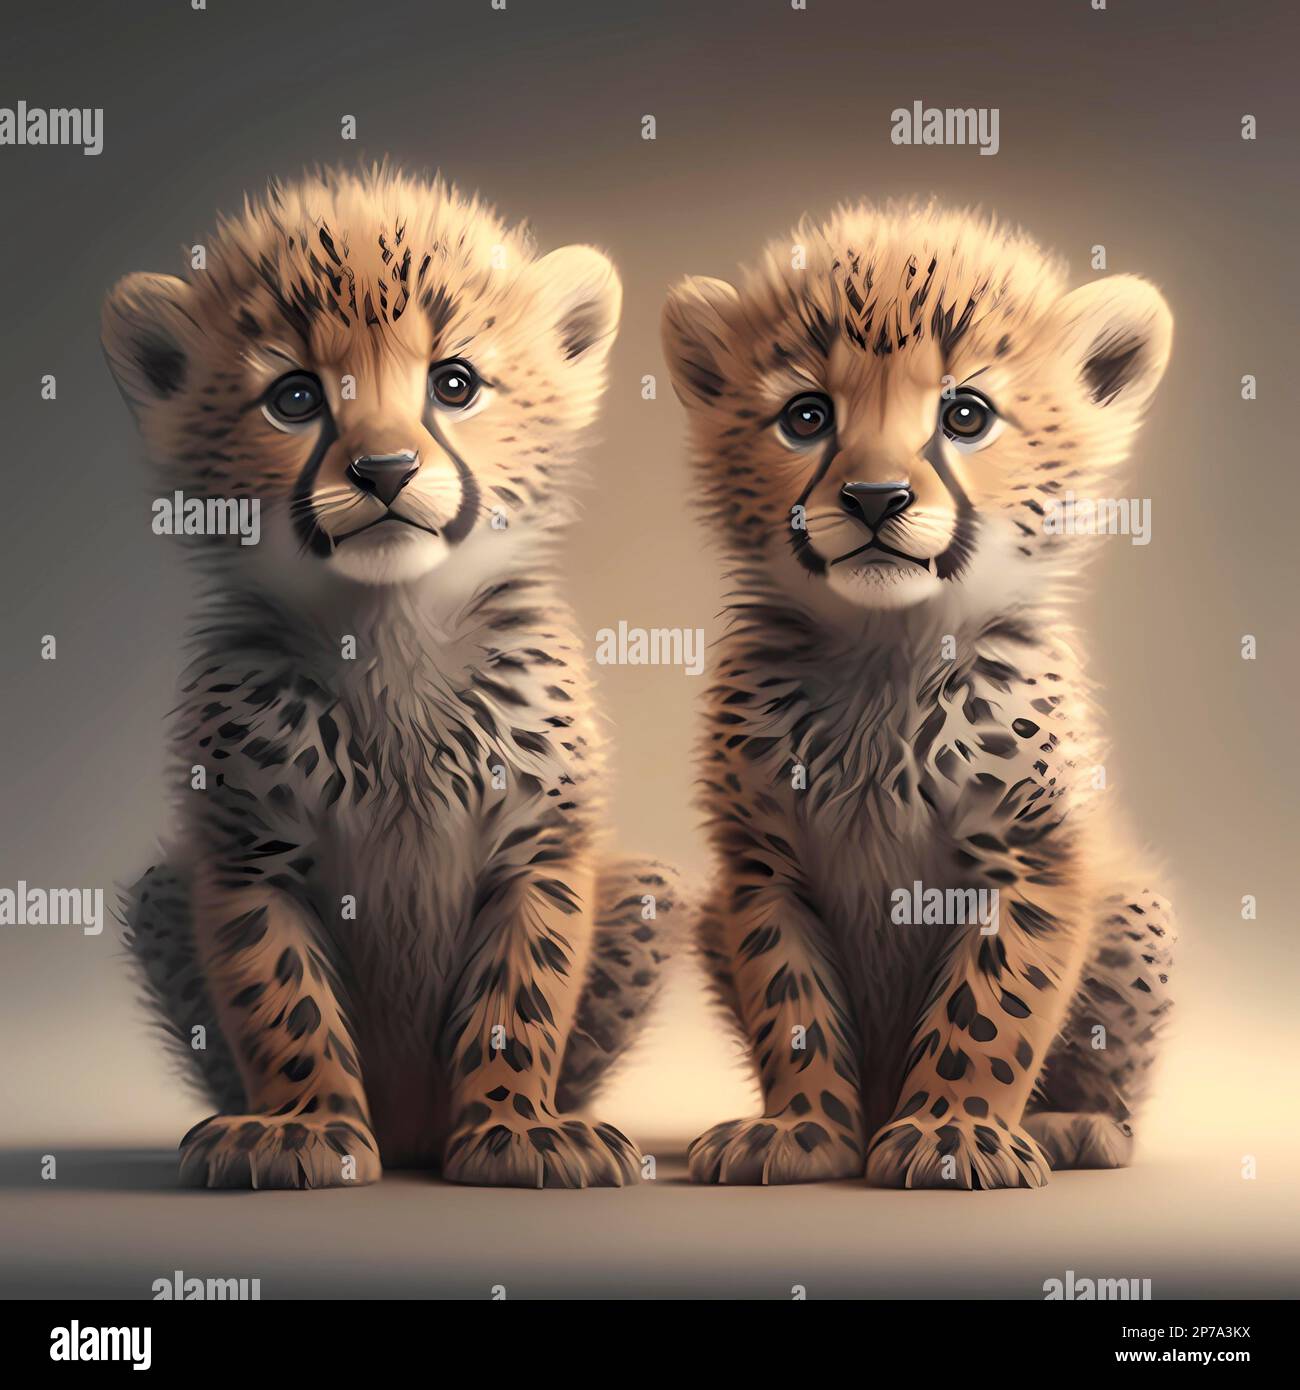 Cheetahs (Acinonyx jubatus) in front of black background, Ai generated Stock Photo